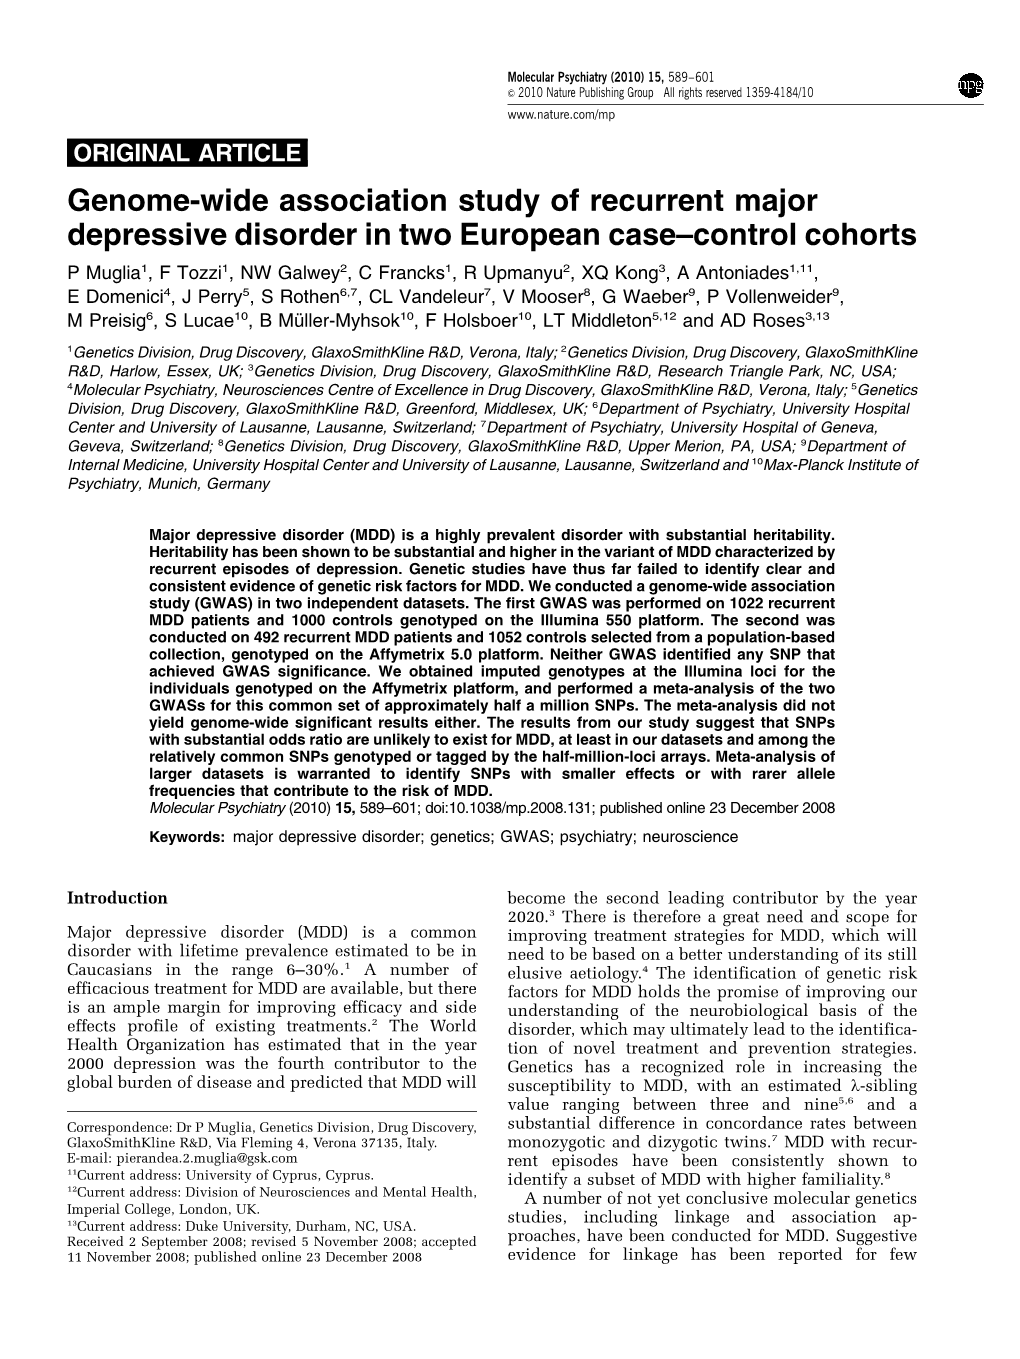 Genome-Wide Association Study of Recurrent Major Depressive